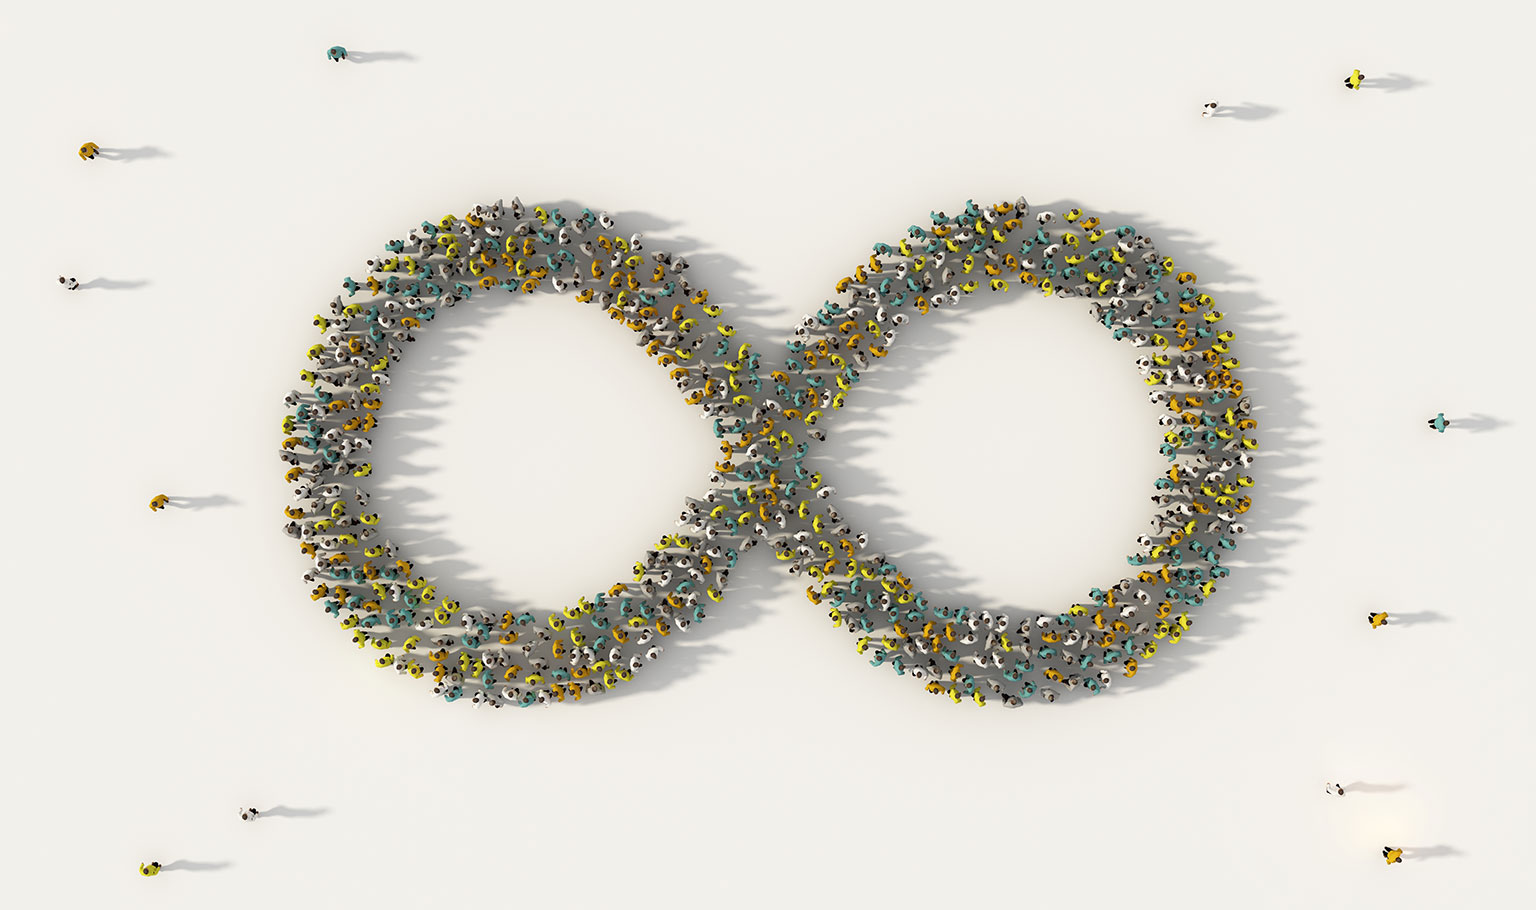 infinity loop of the circular economy